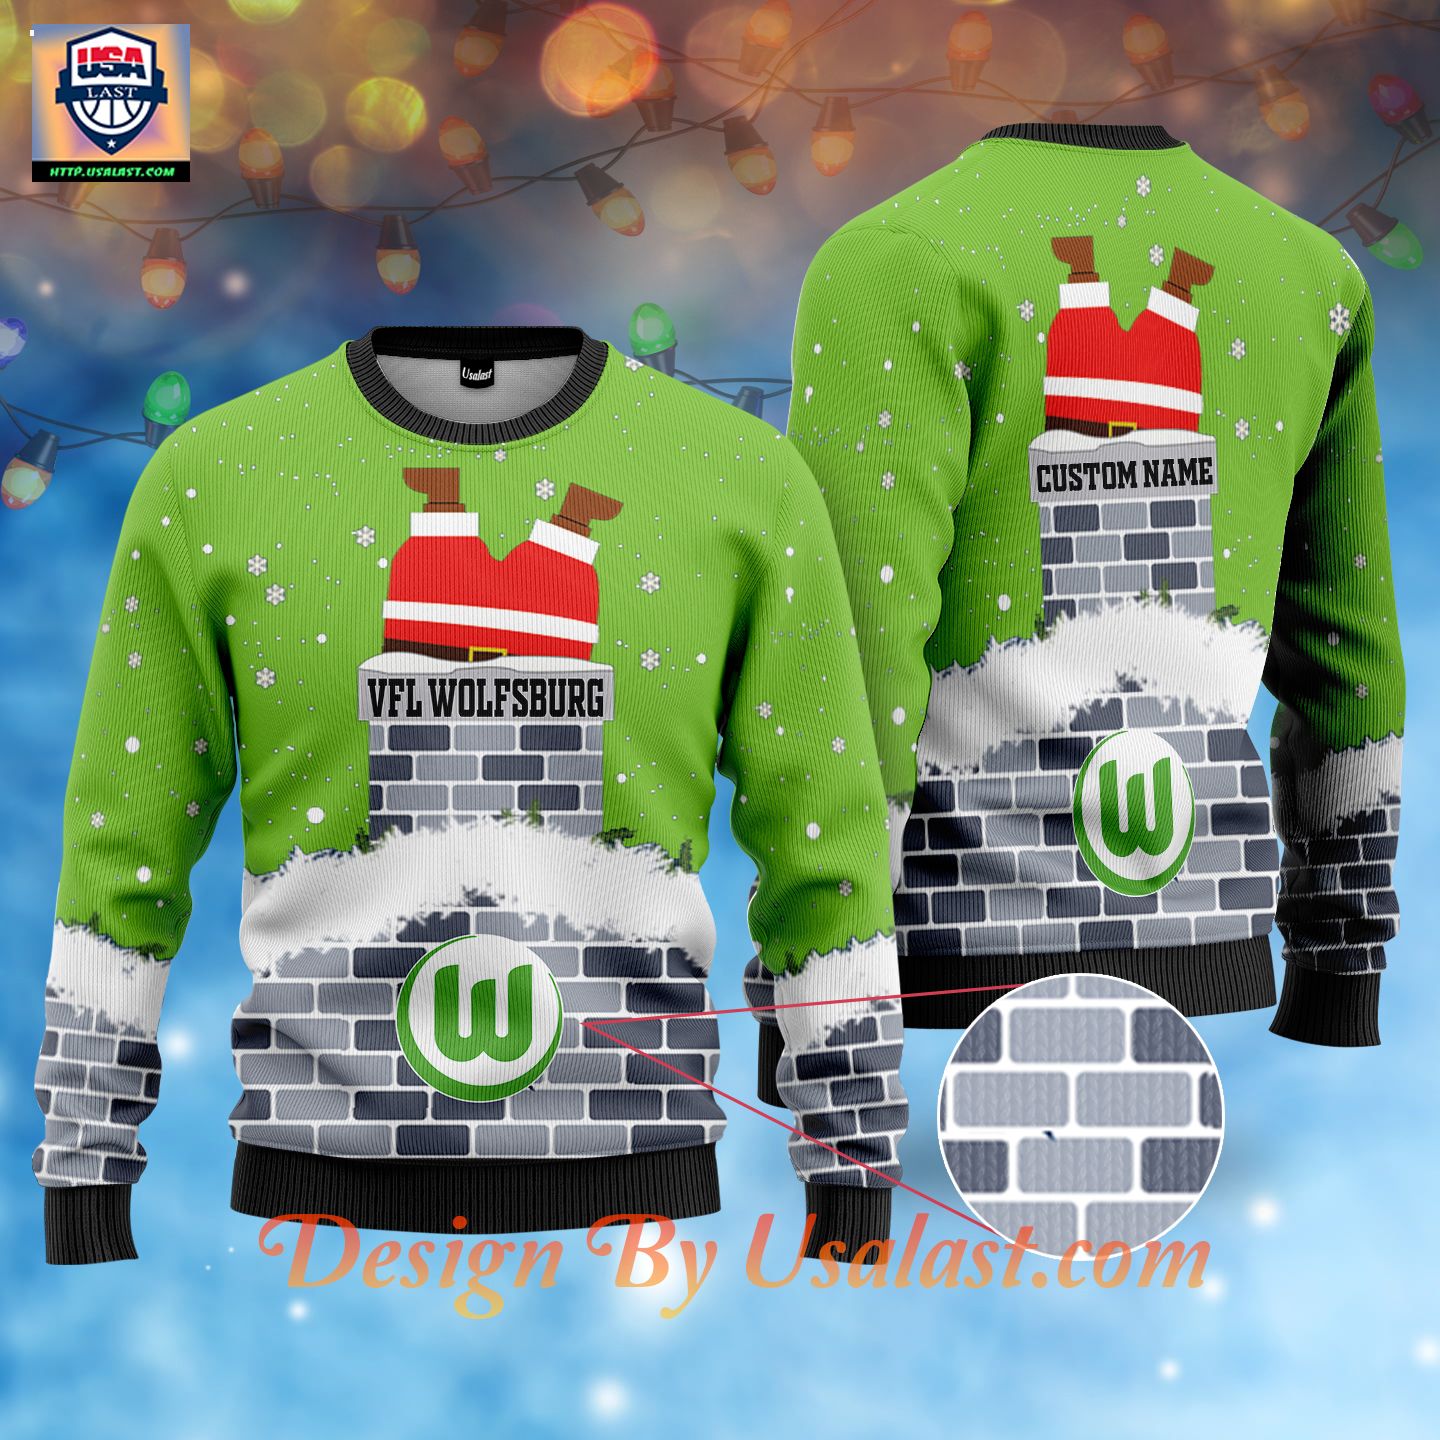 VfL Wolfsburg Custom Name Ugly Christmas Sweater Jumper - Nice shot bro